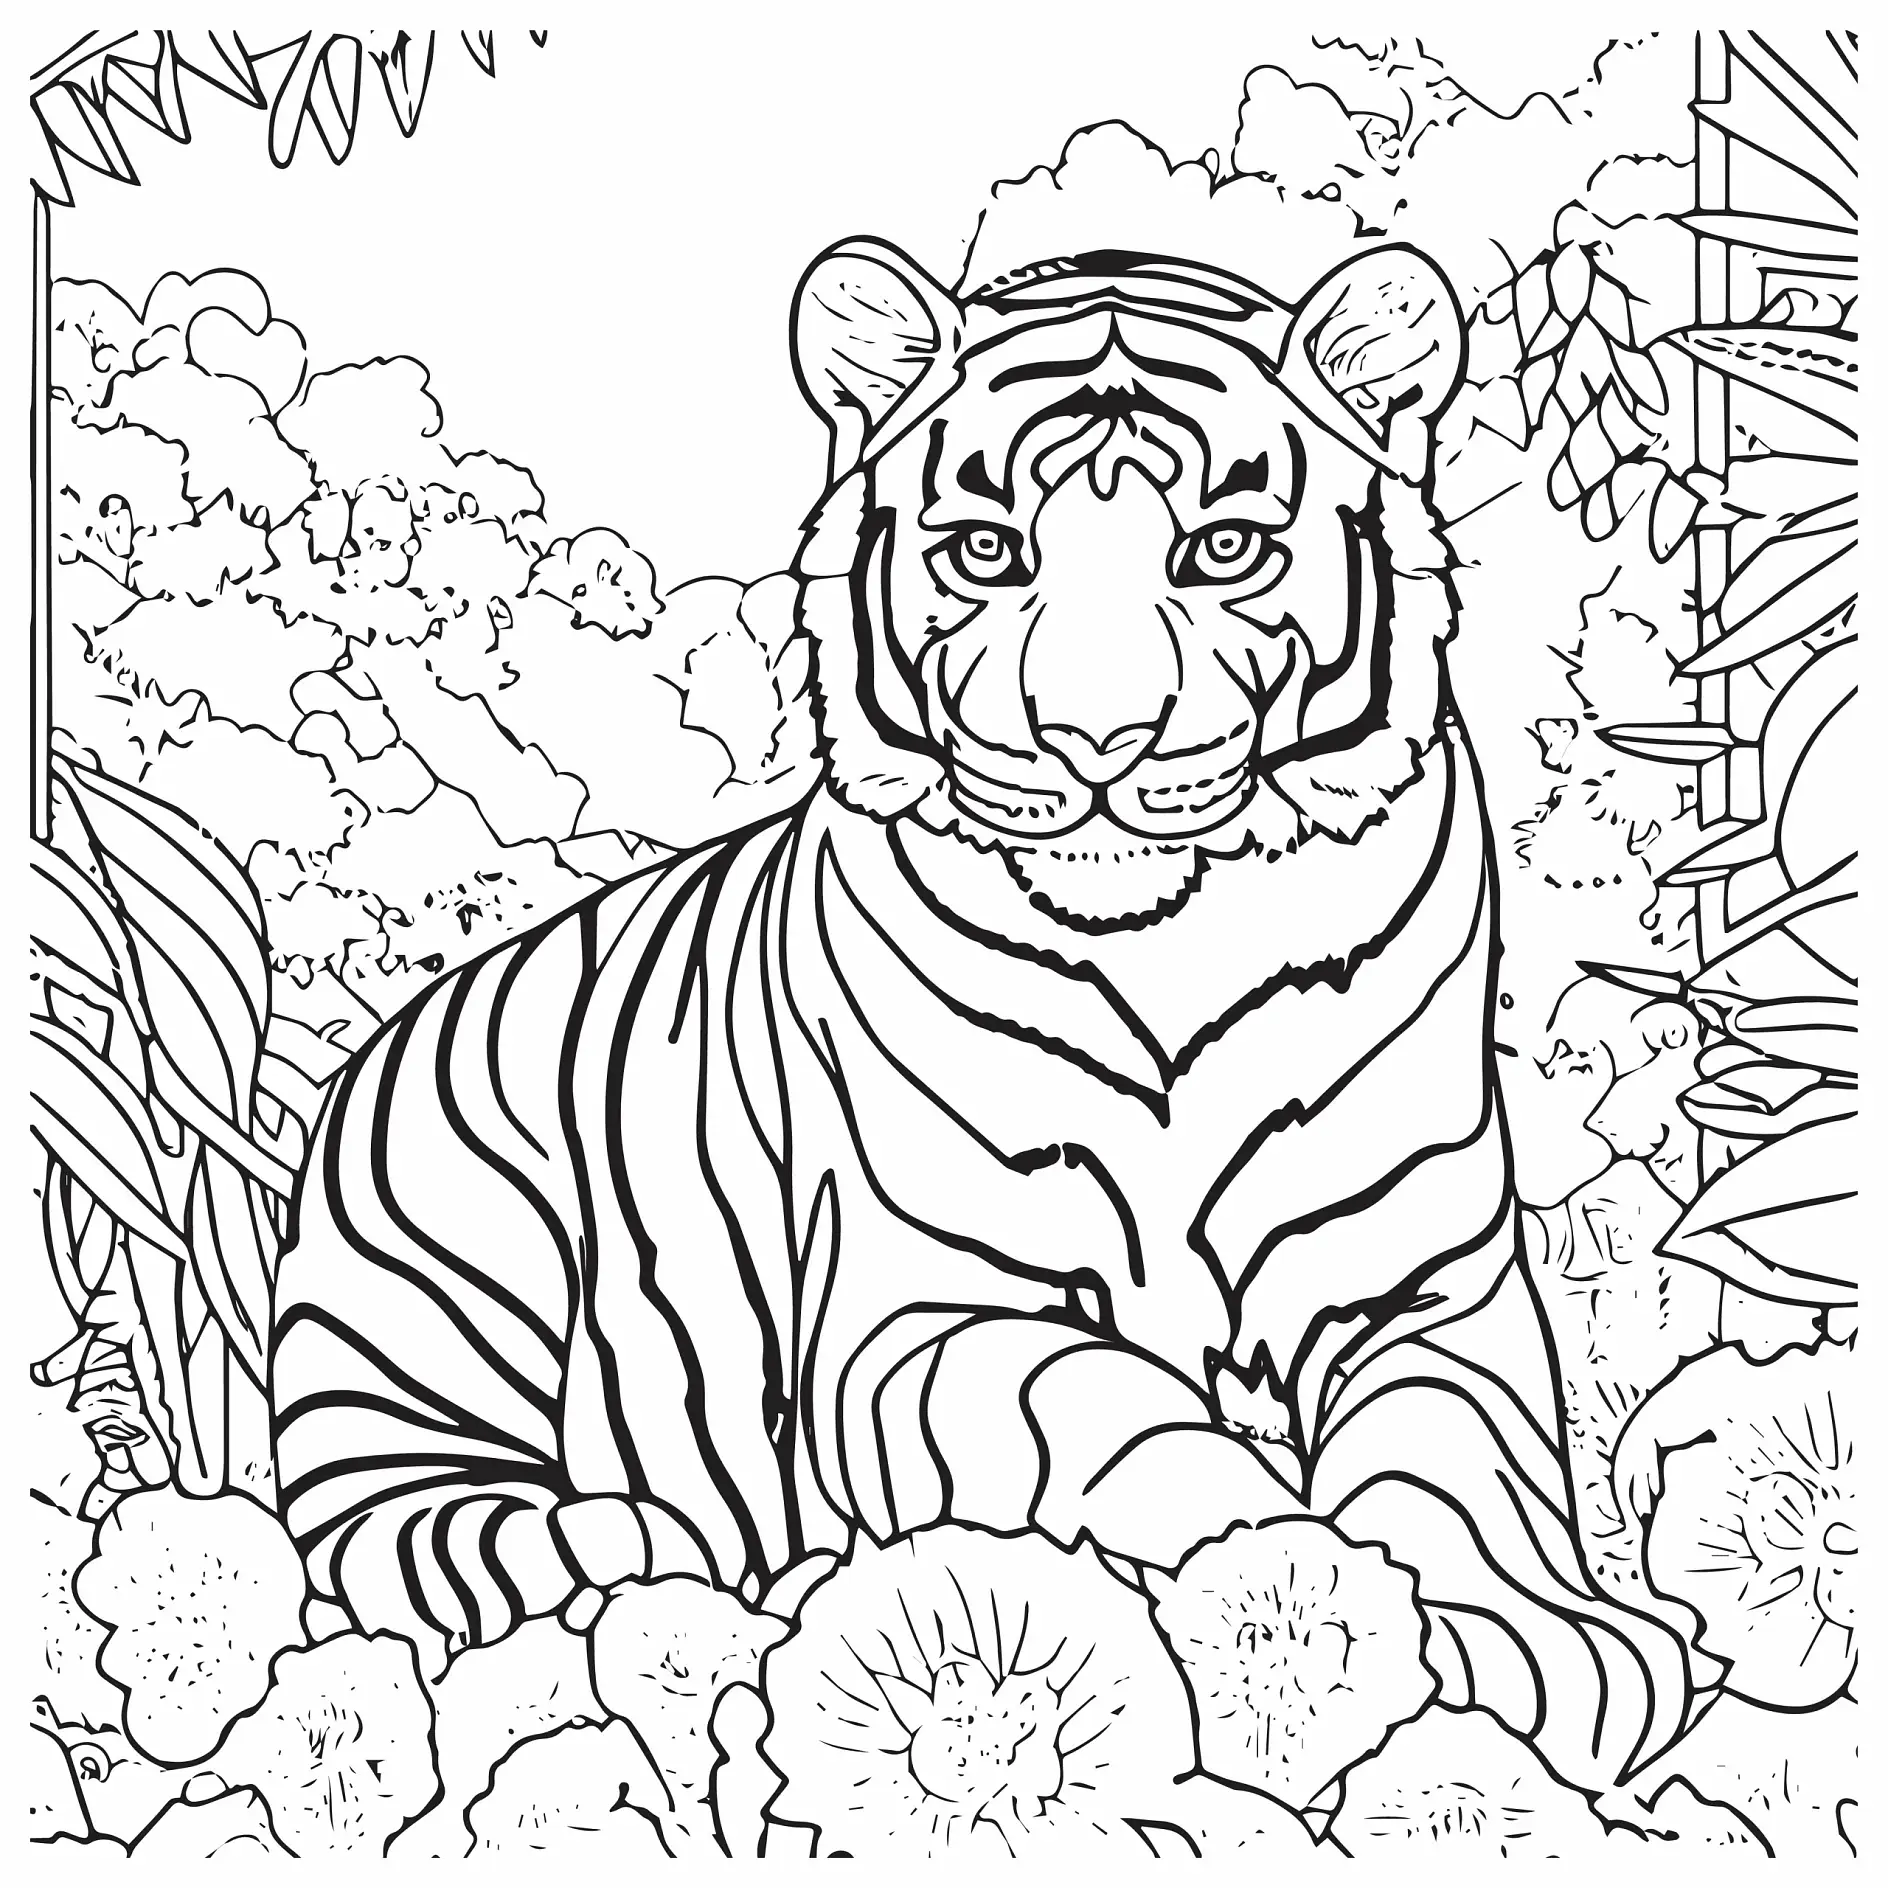 Ausmalbild Tiger ruht in Dschungelumgebung